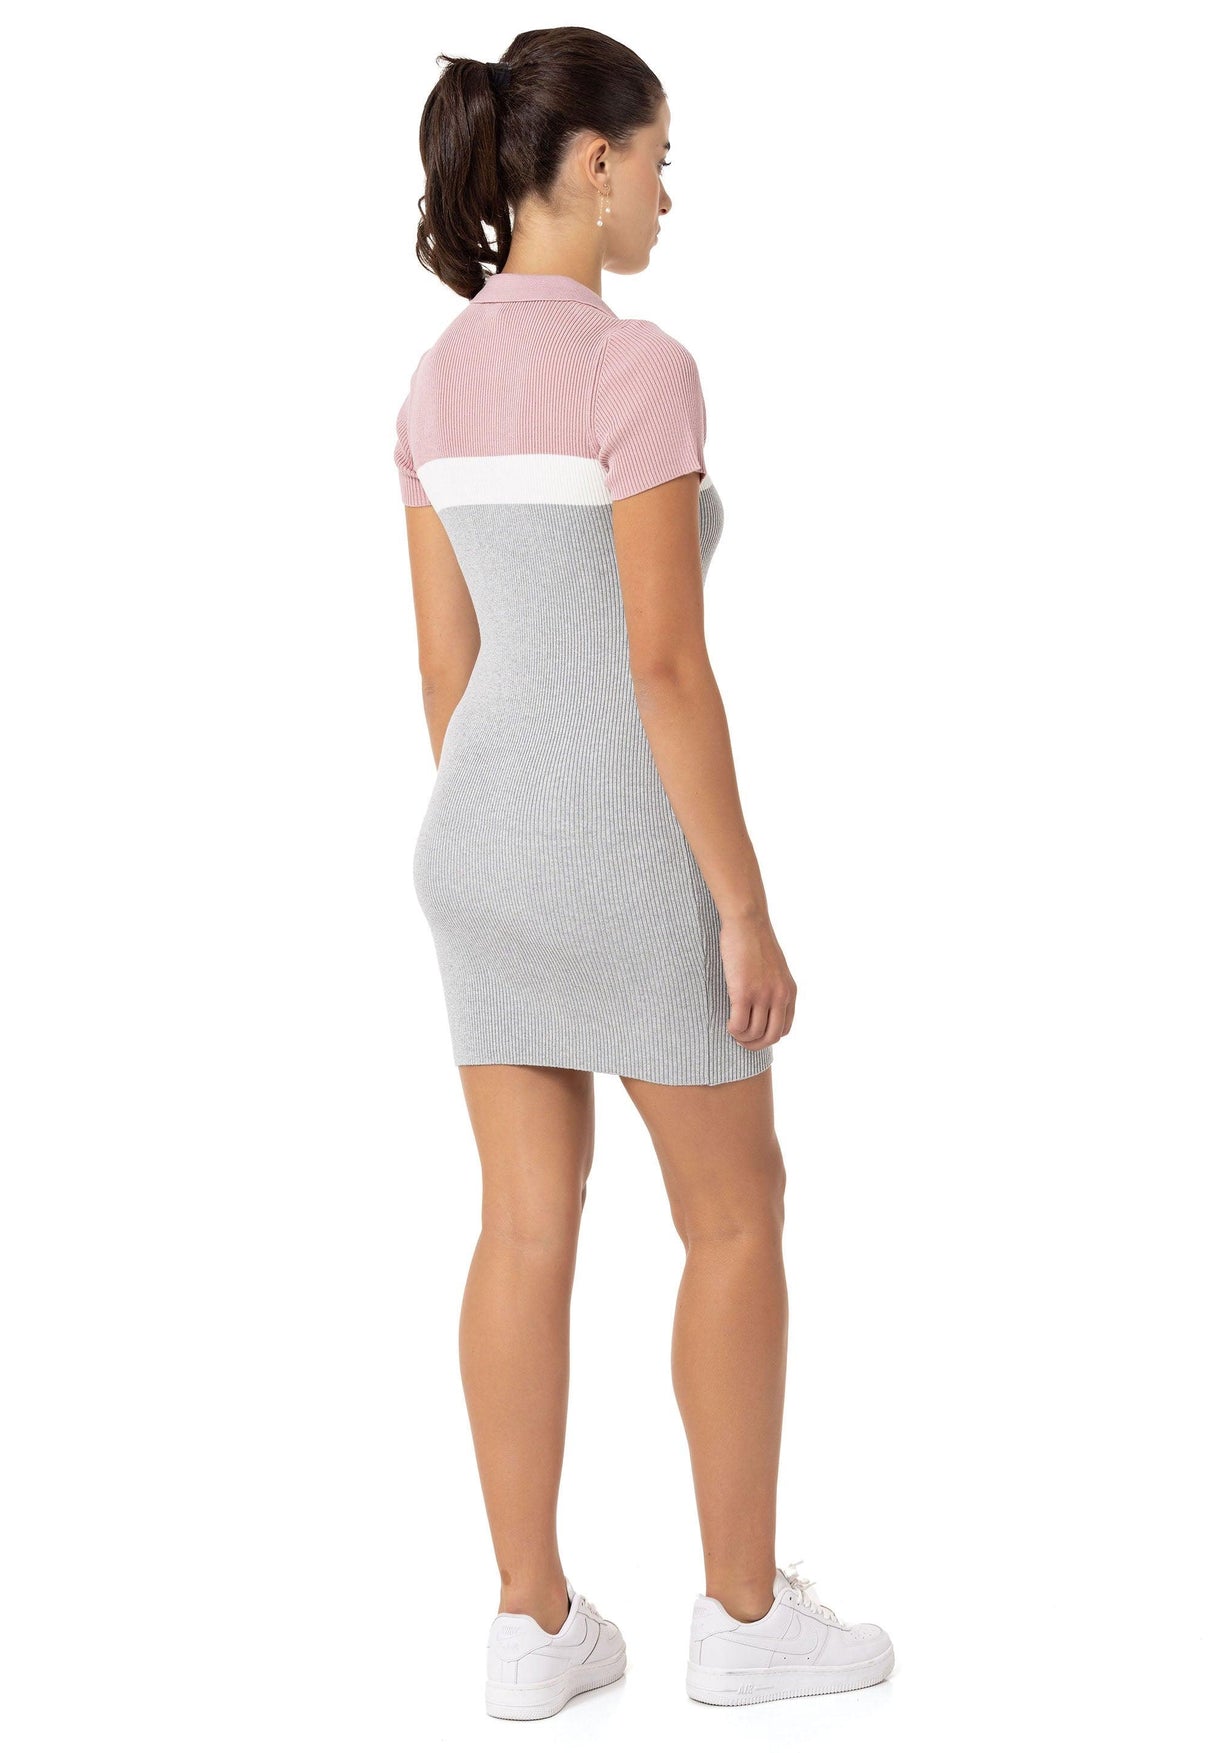 WP256 Kadın Triko Mini Elbise